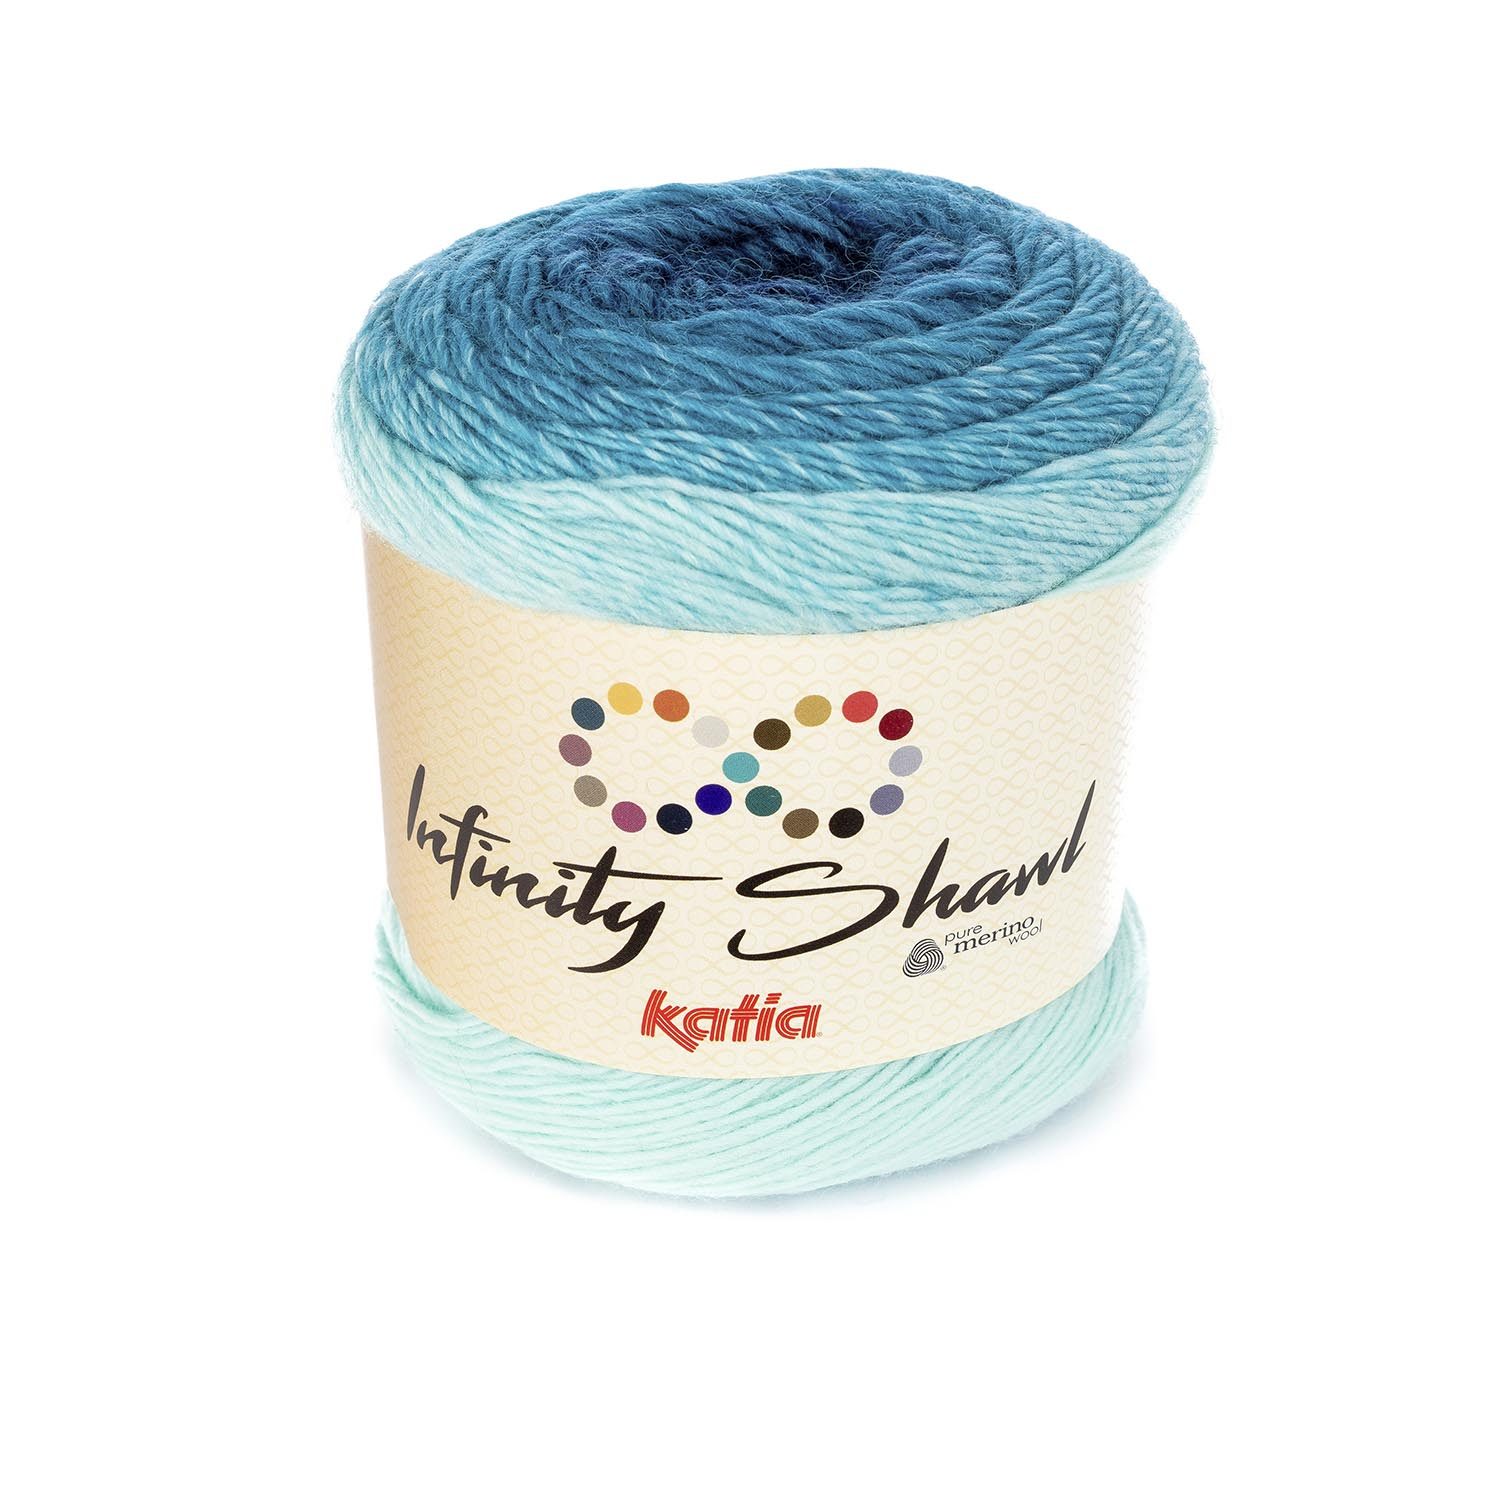 yarn-wool-infinityshawl-knit-merino-light-blue-medium-blue-blue-autumn-winter-katia-312-g